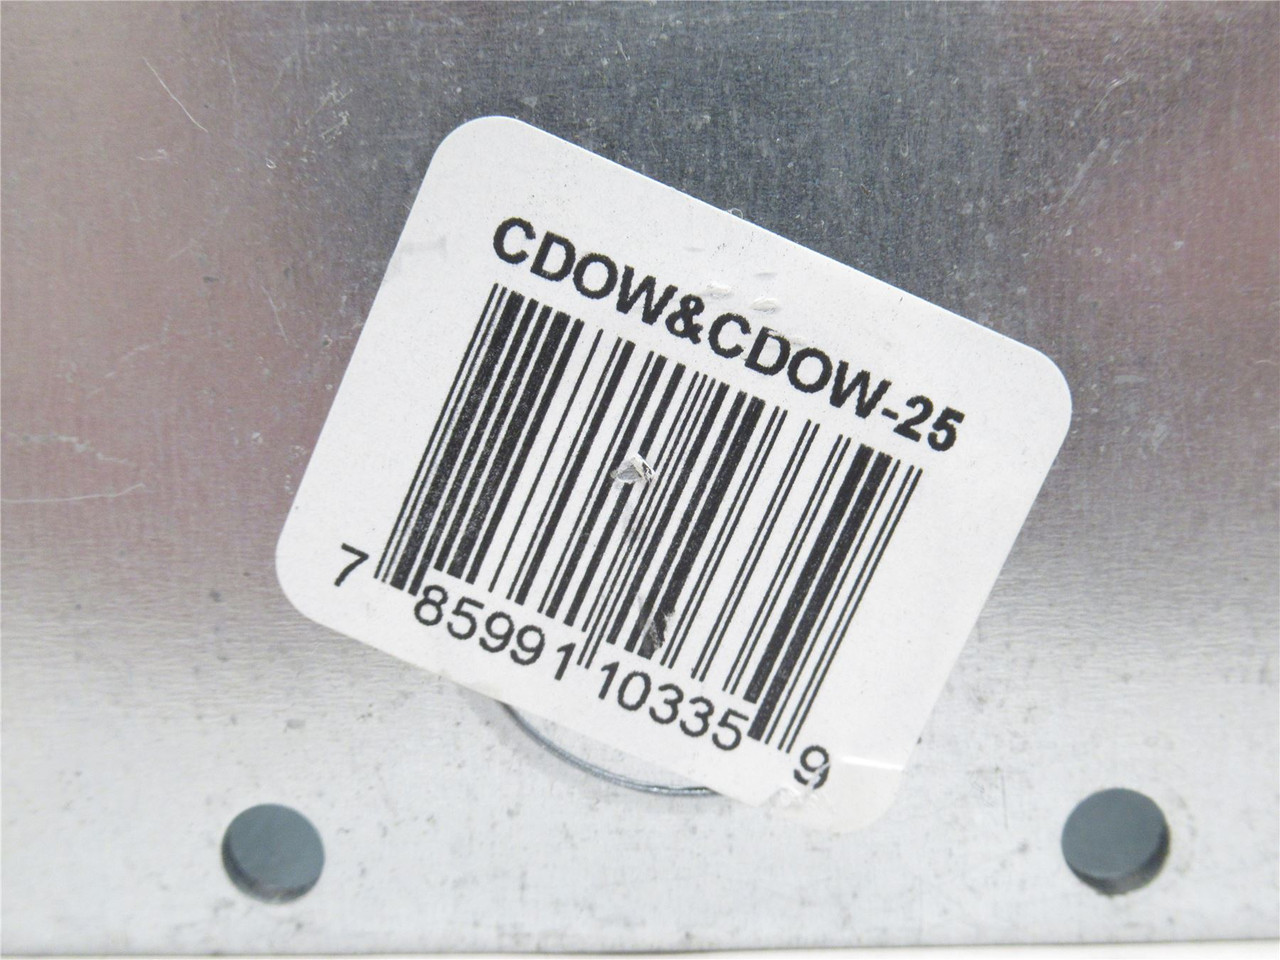 Steel City CDOW; Switch Box W/Gangable Ears; 3" x 2" x 2-1/2"